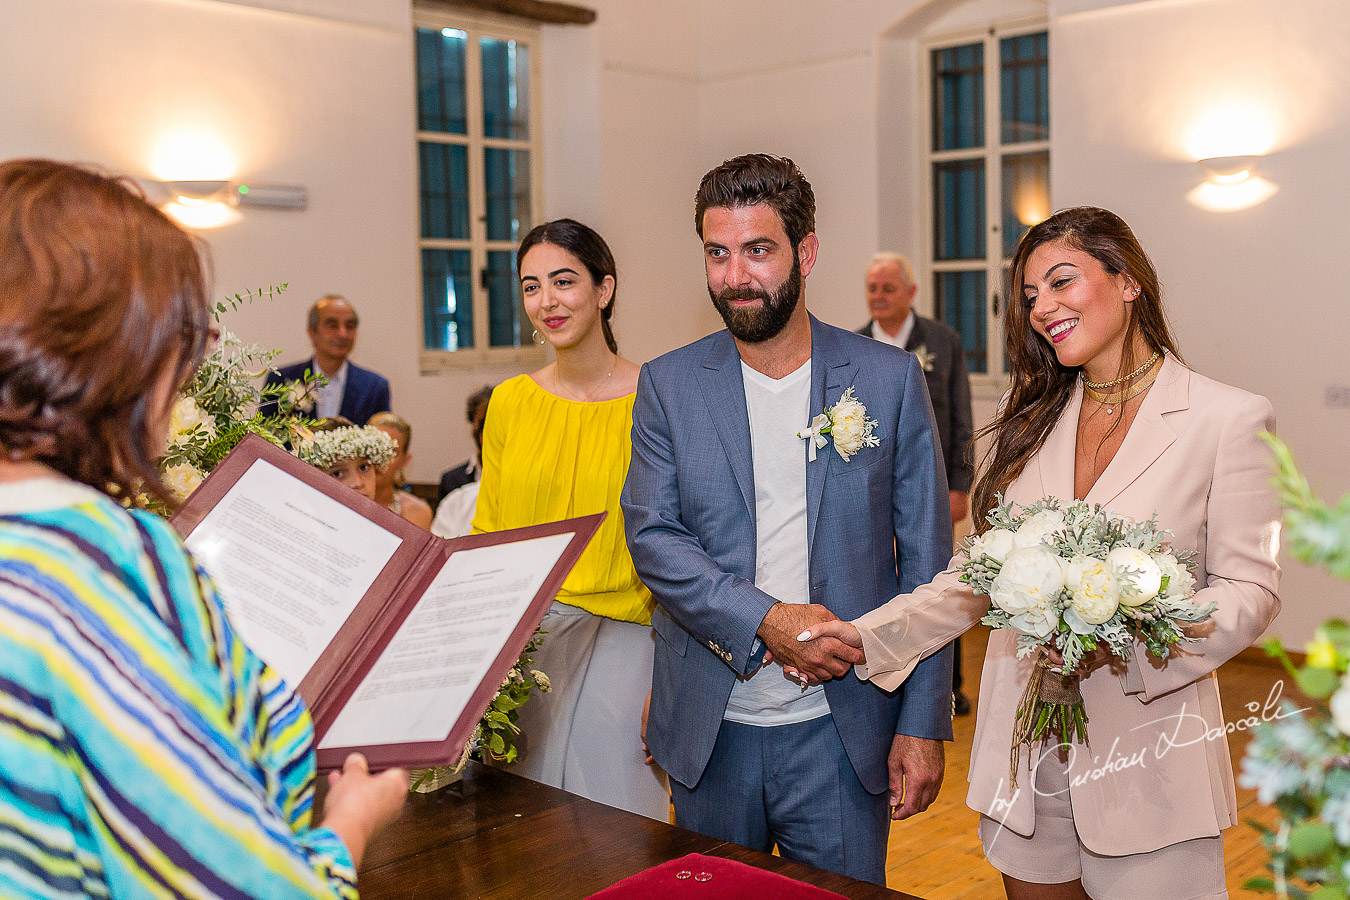 Intimate Wedding at Londa Hotel photographed by Cyprus Photographer Cristian Dascalu